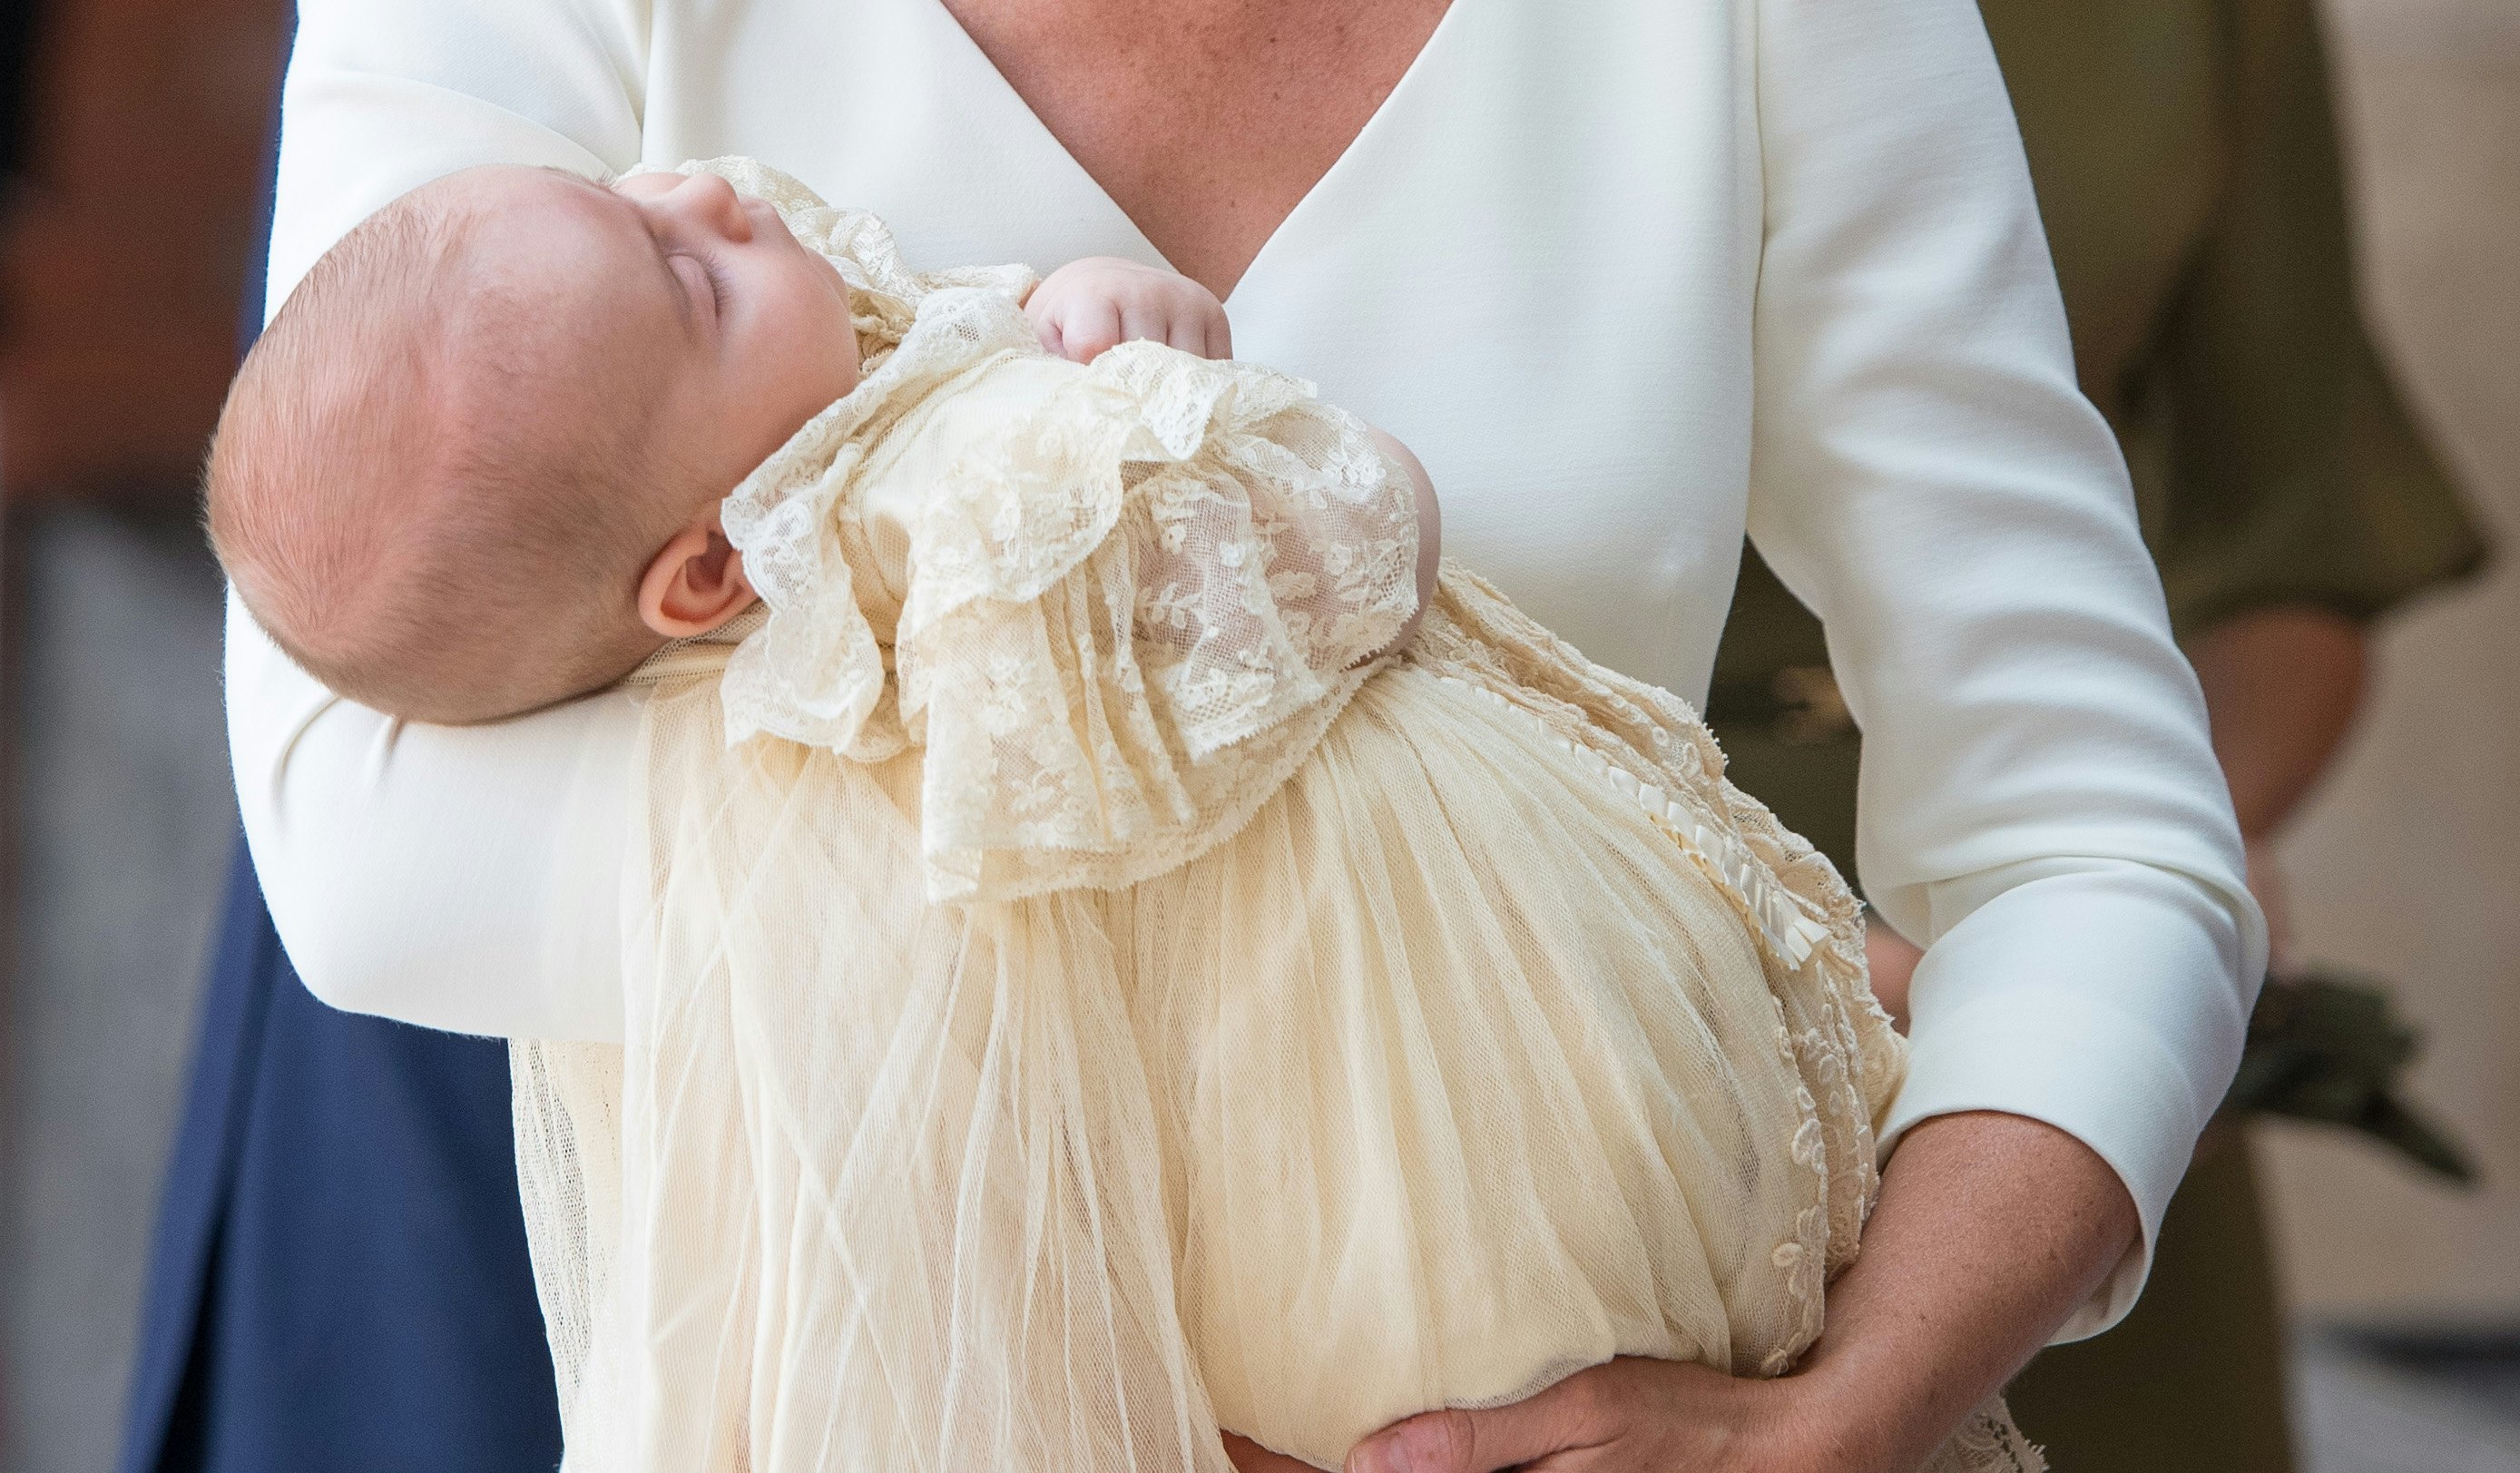 baby biscotti christening gowns